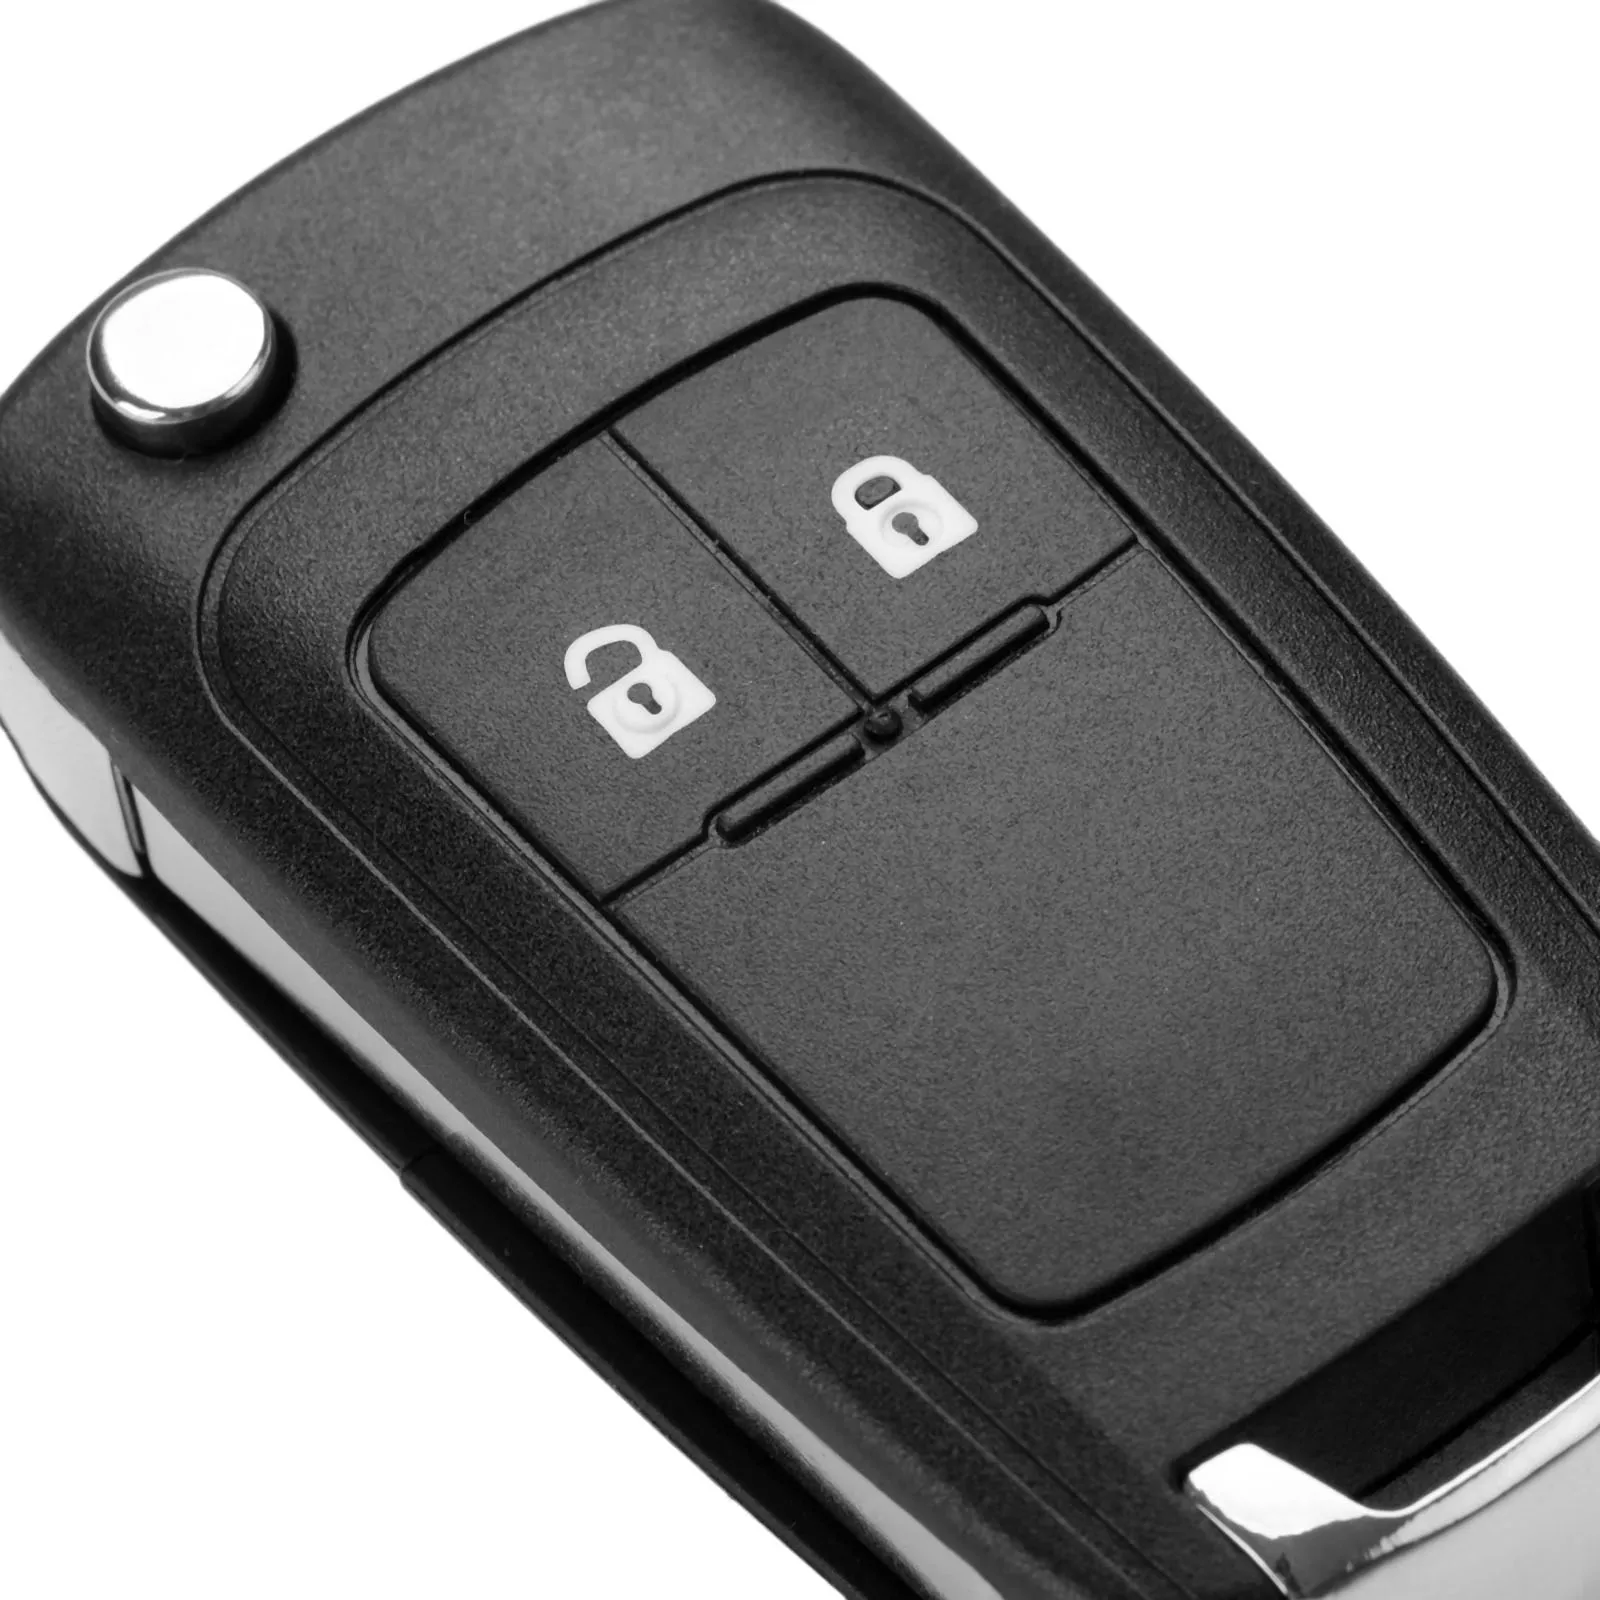 Yetaha 2 кнопки дистанционного ключа автомобиля 433 МГц подходит для Chevrolet Aveo Cruze Orlando с ID46 чип 2011 2012 2013